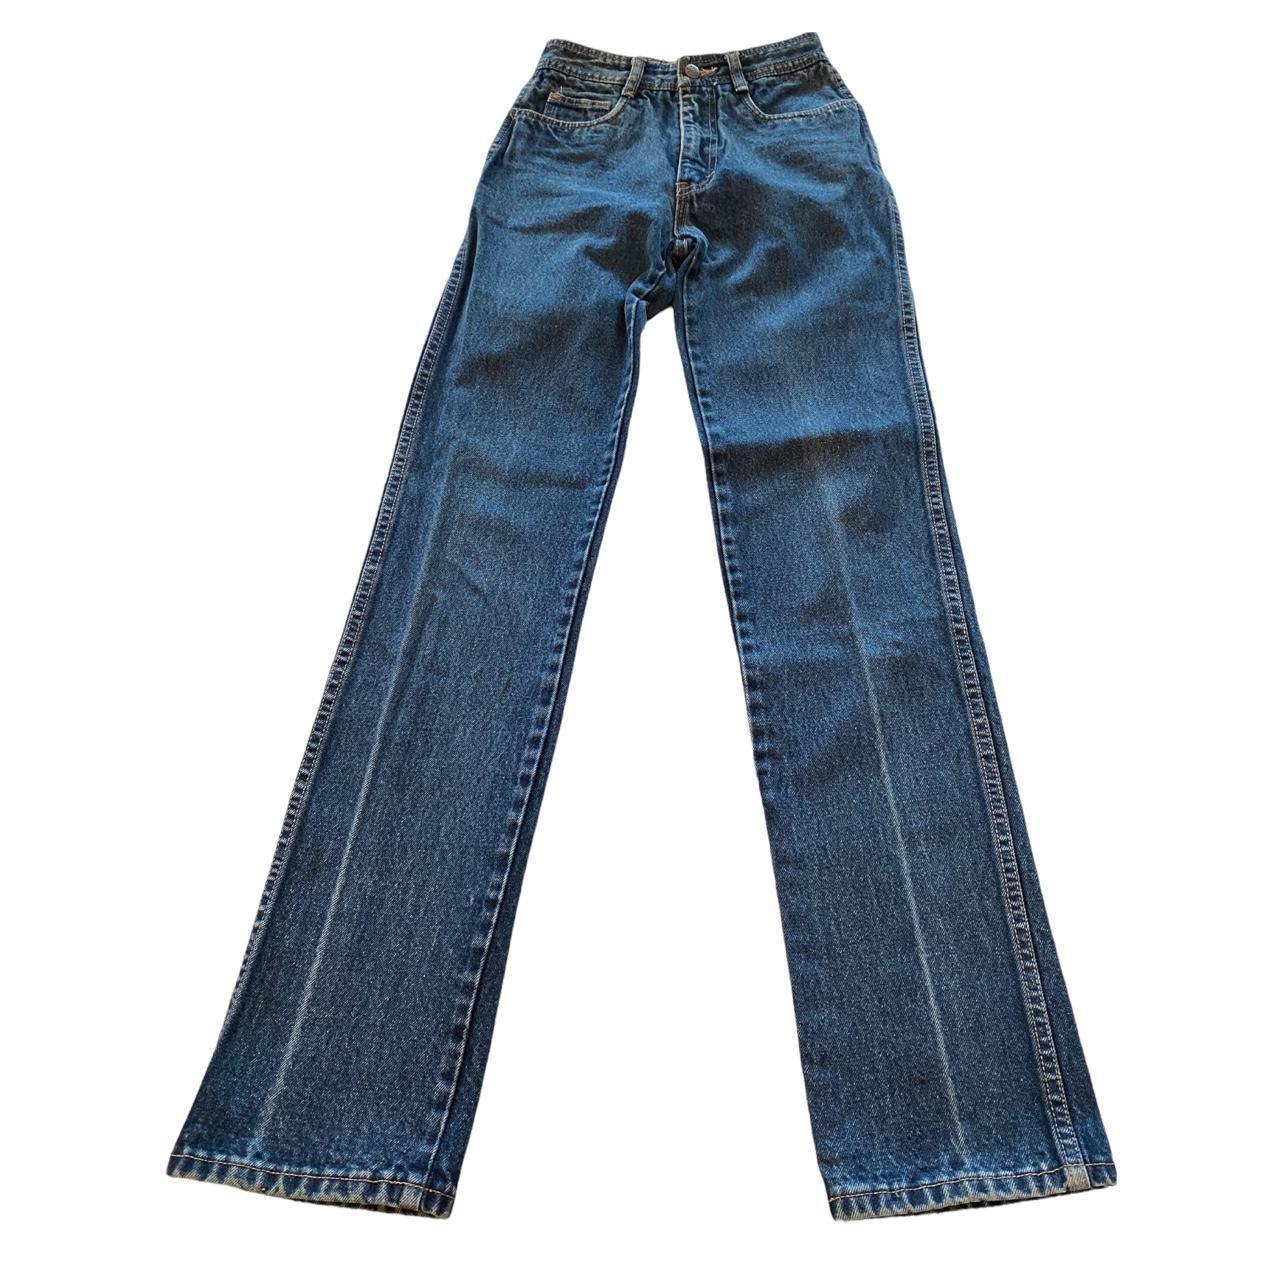 Vintage 1970s Straight Leg Mac Keen Jeans 100%... - Depop